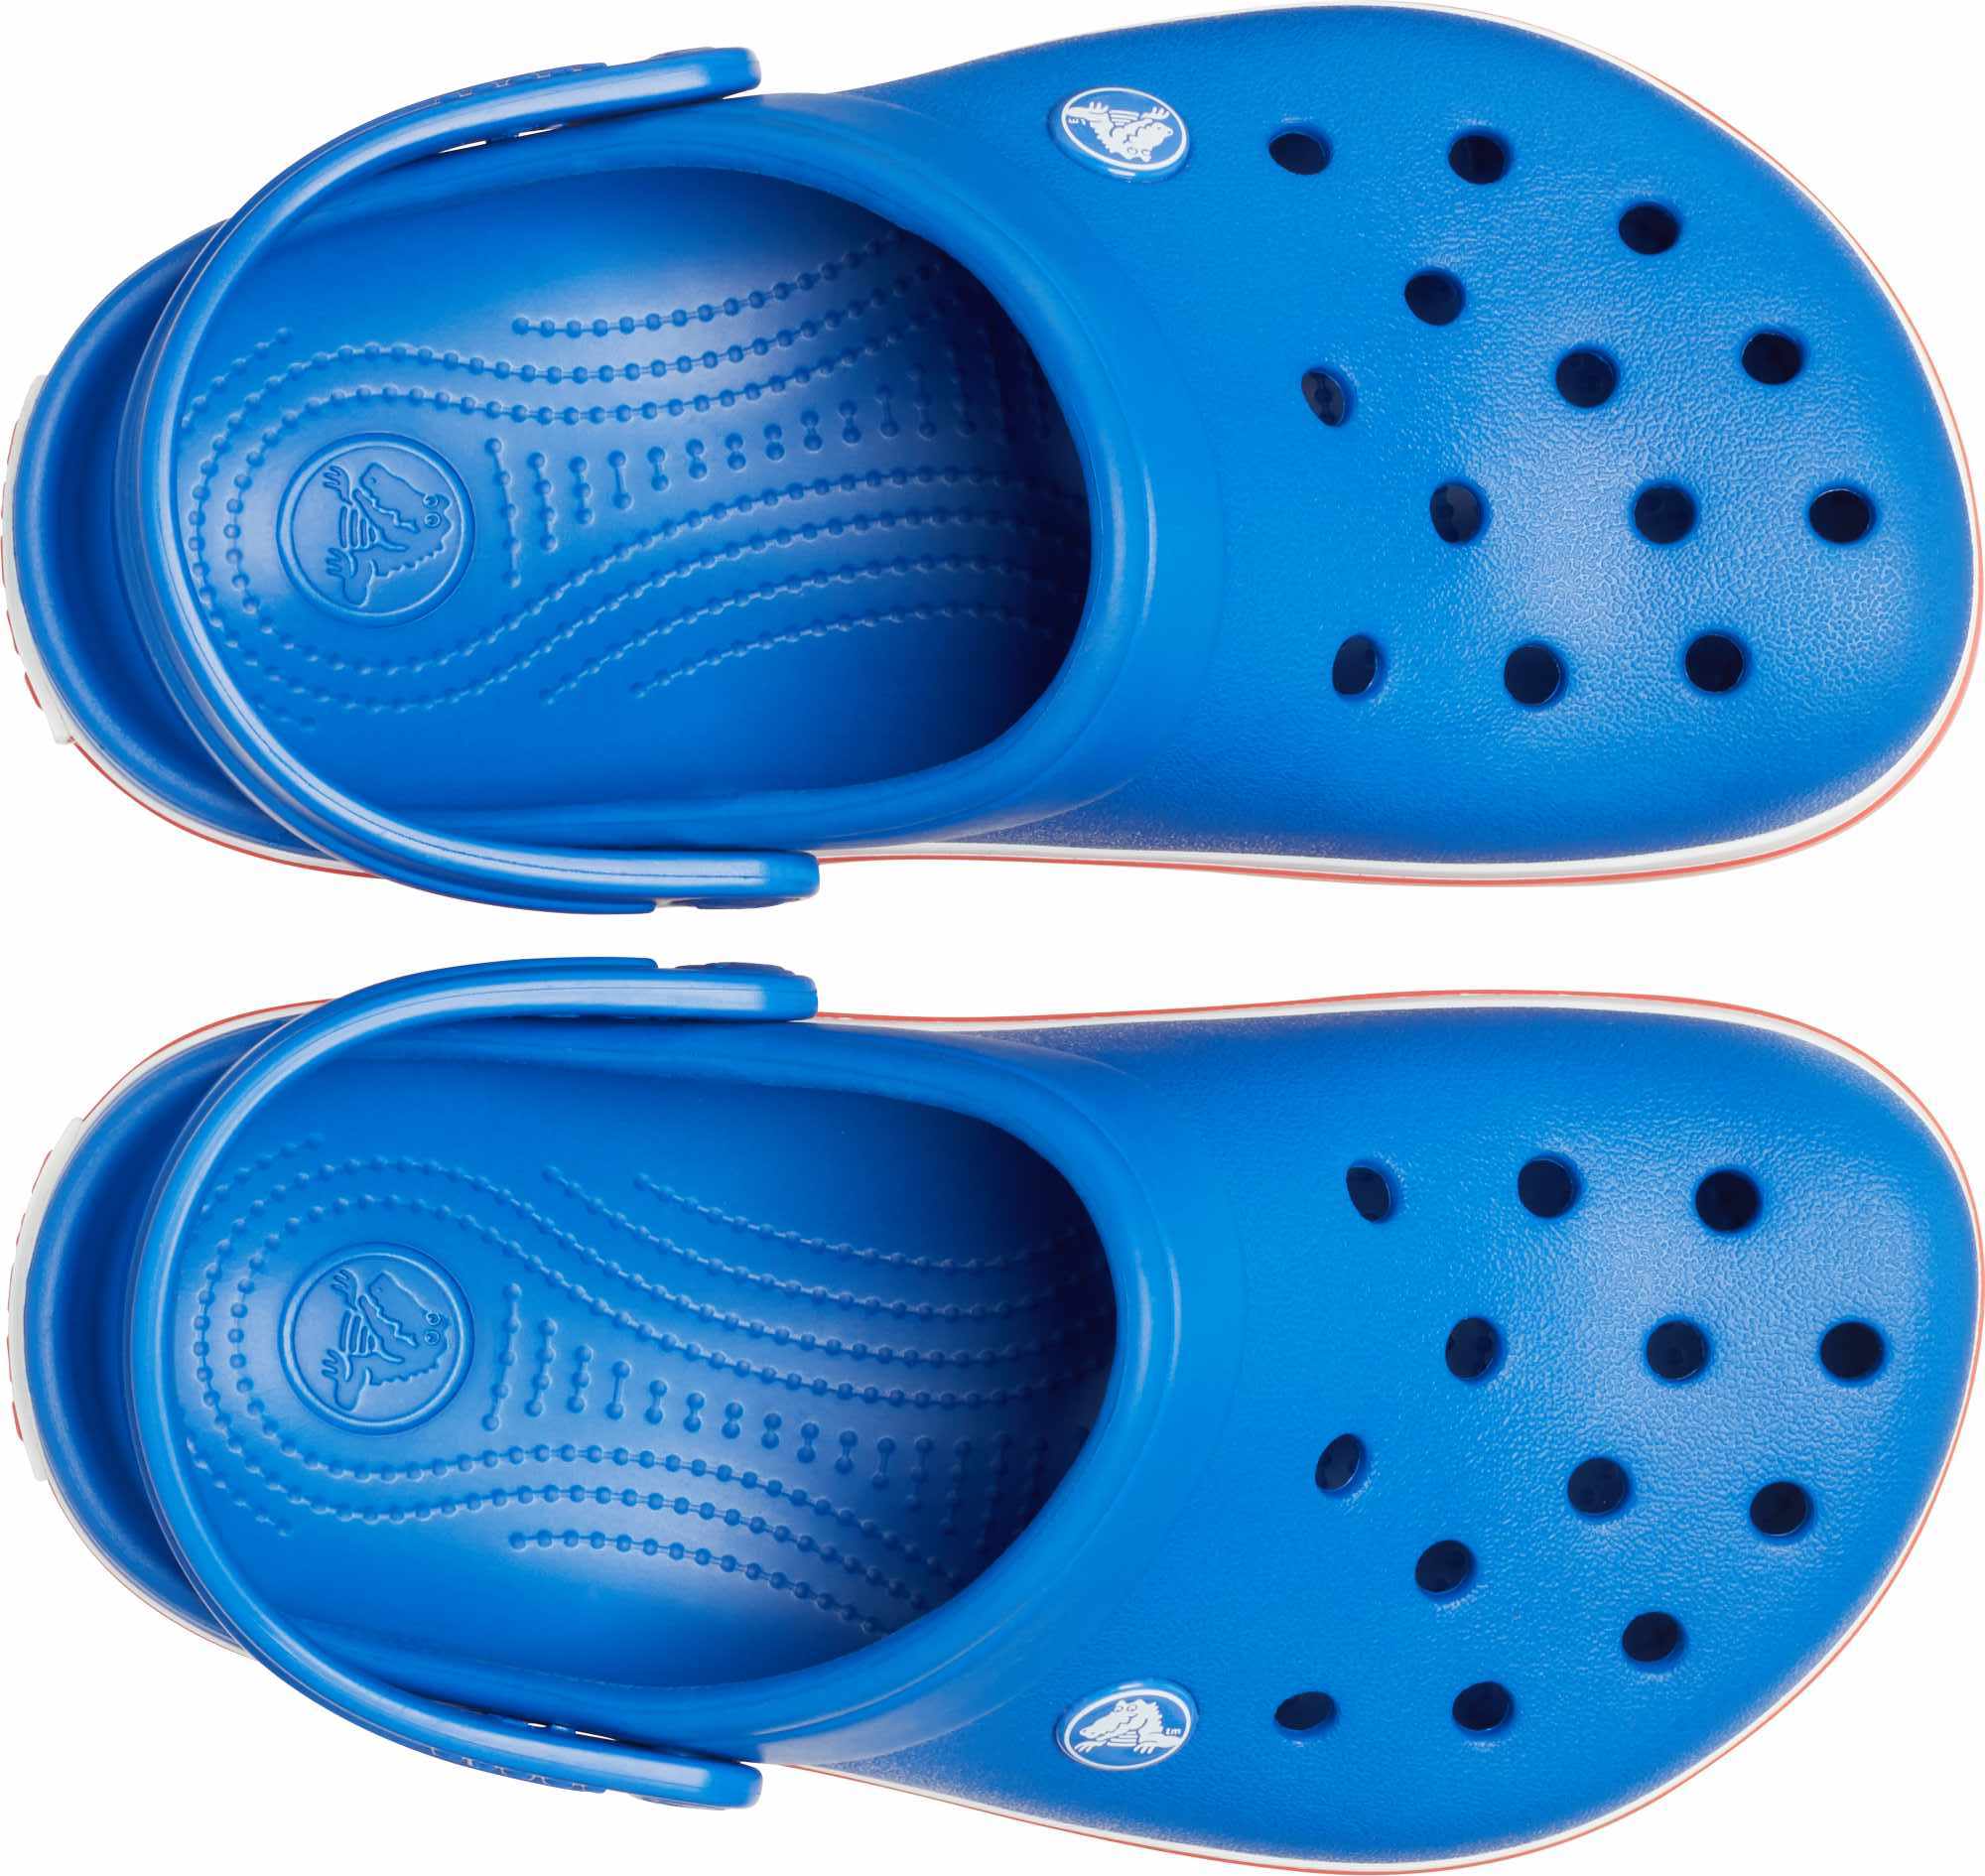 Children’s slippers